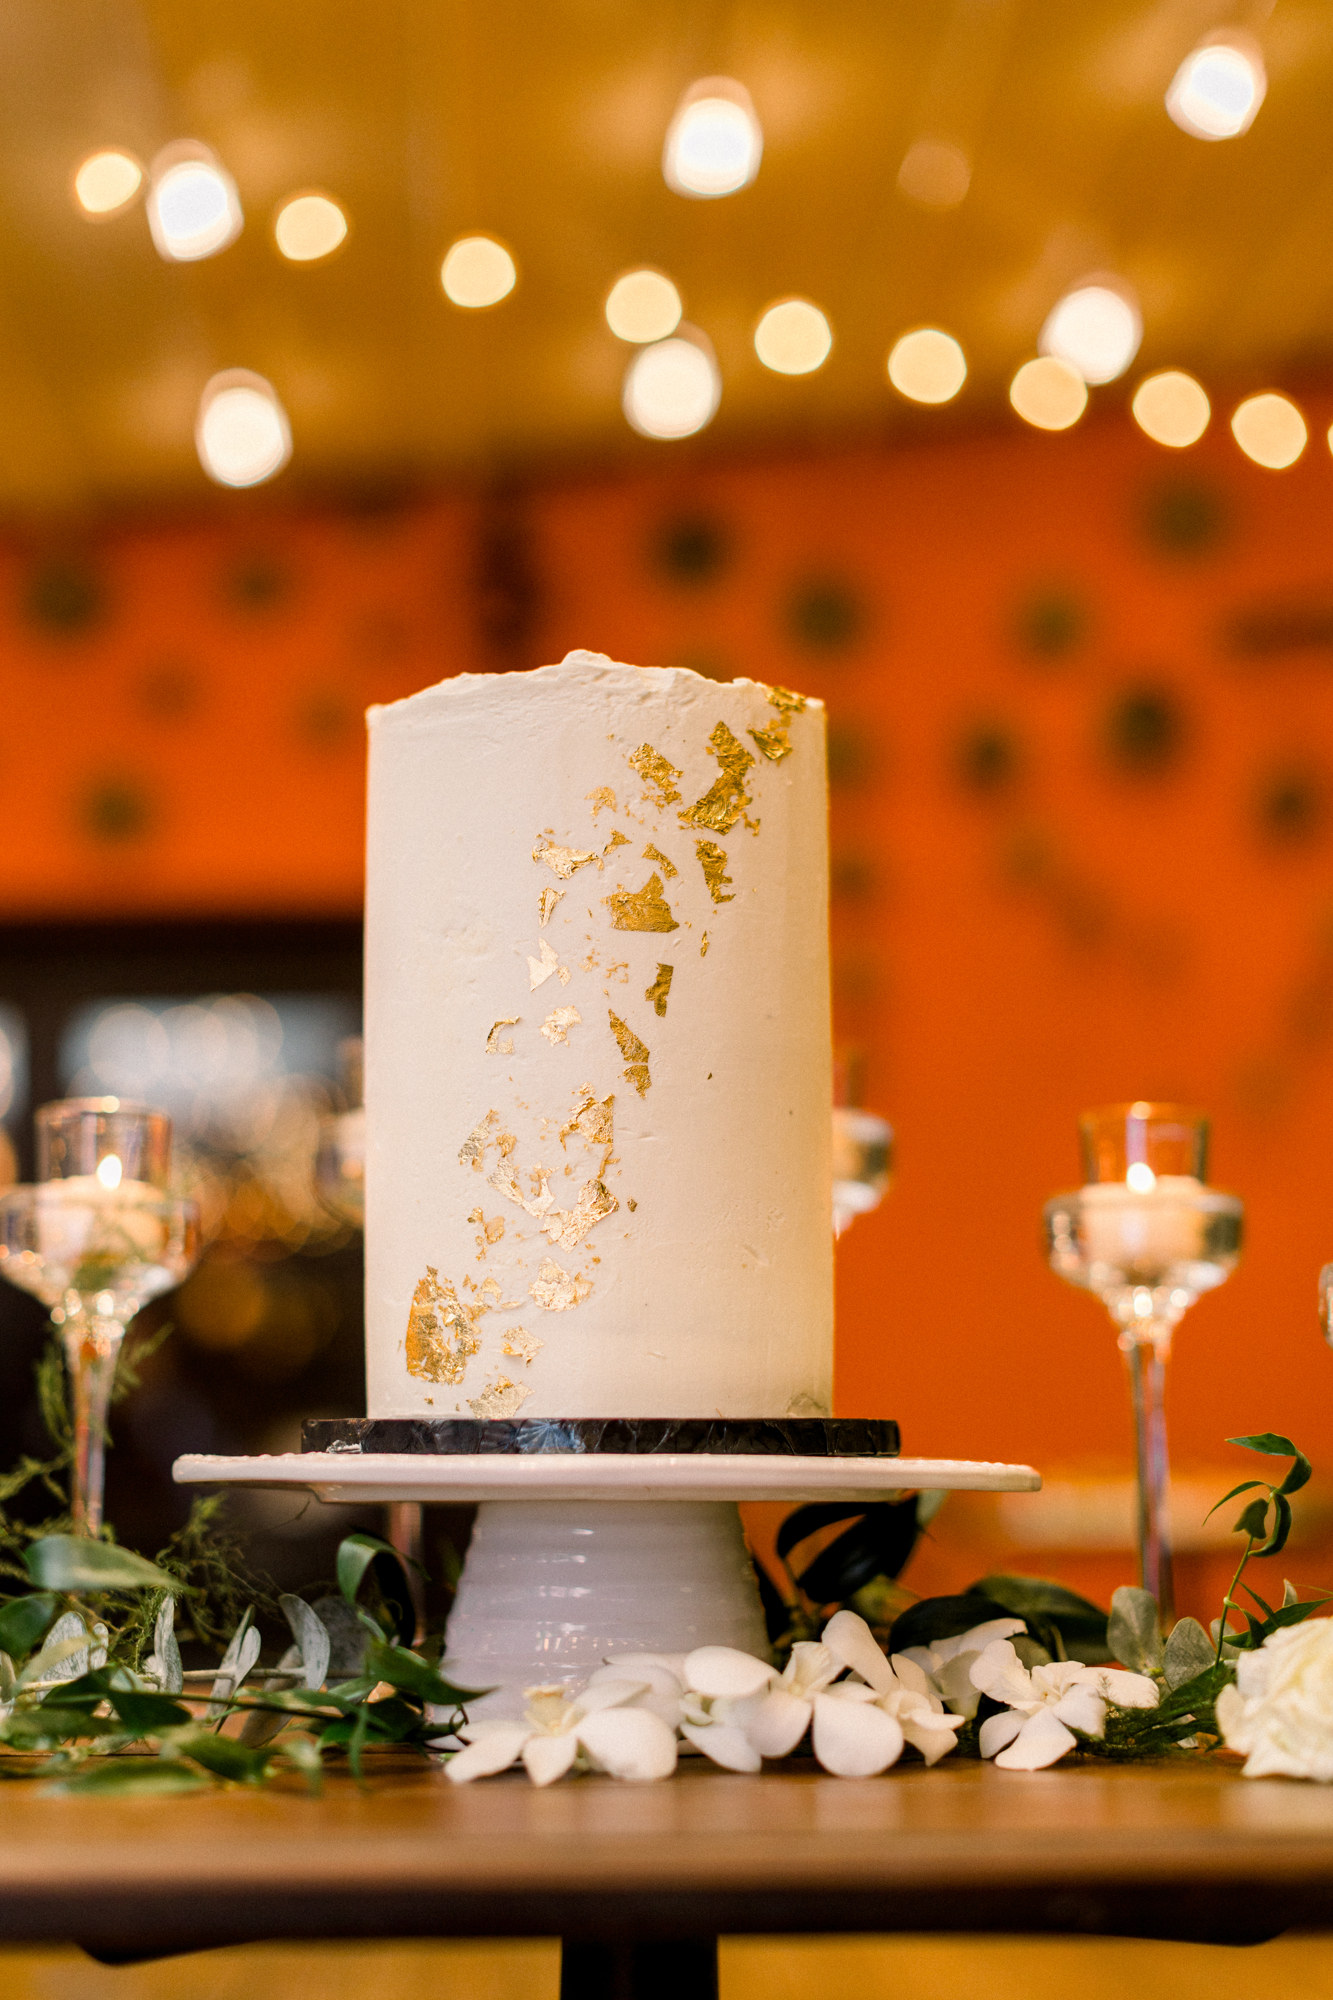 MyMoon wedding reception cake